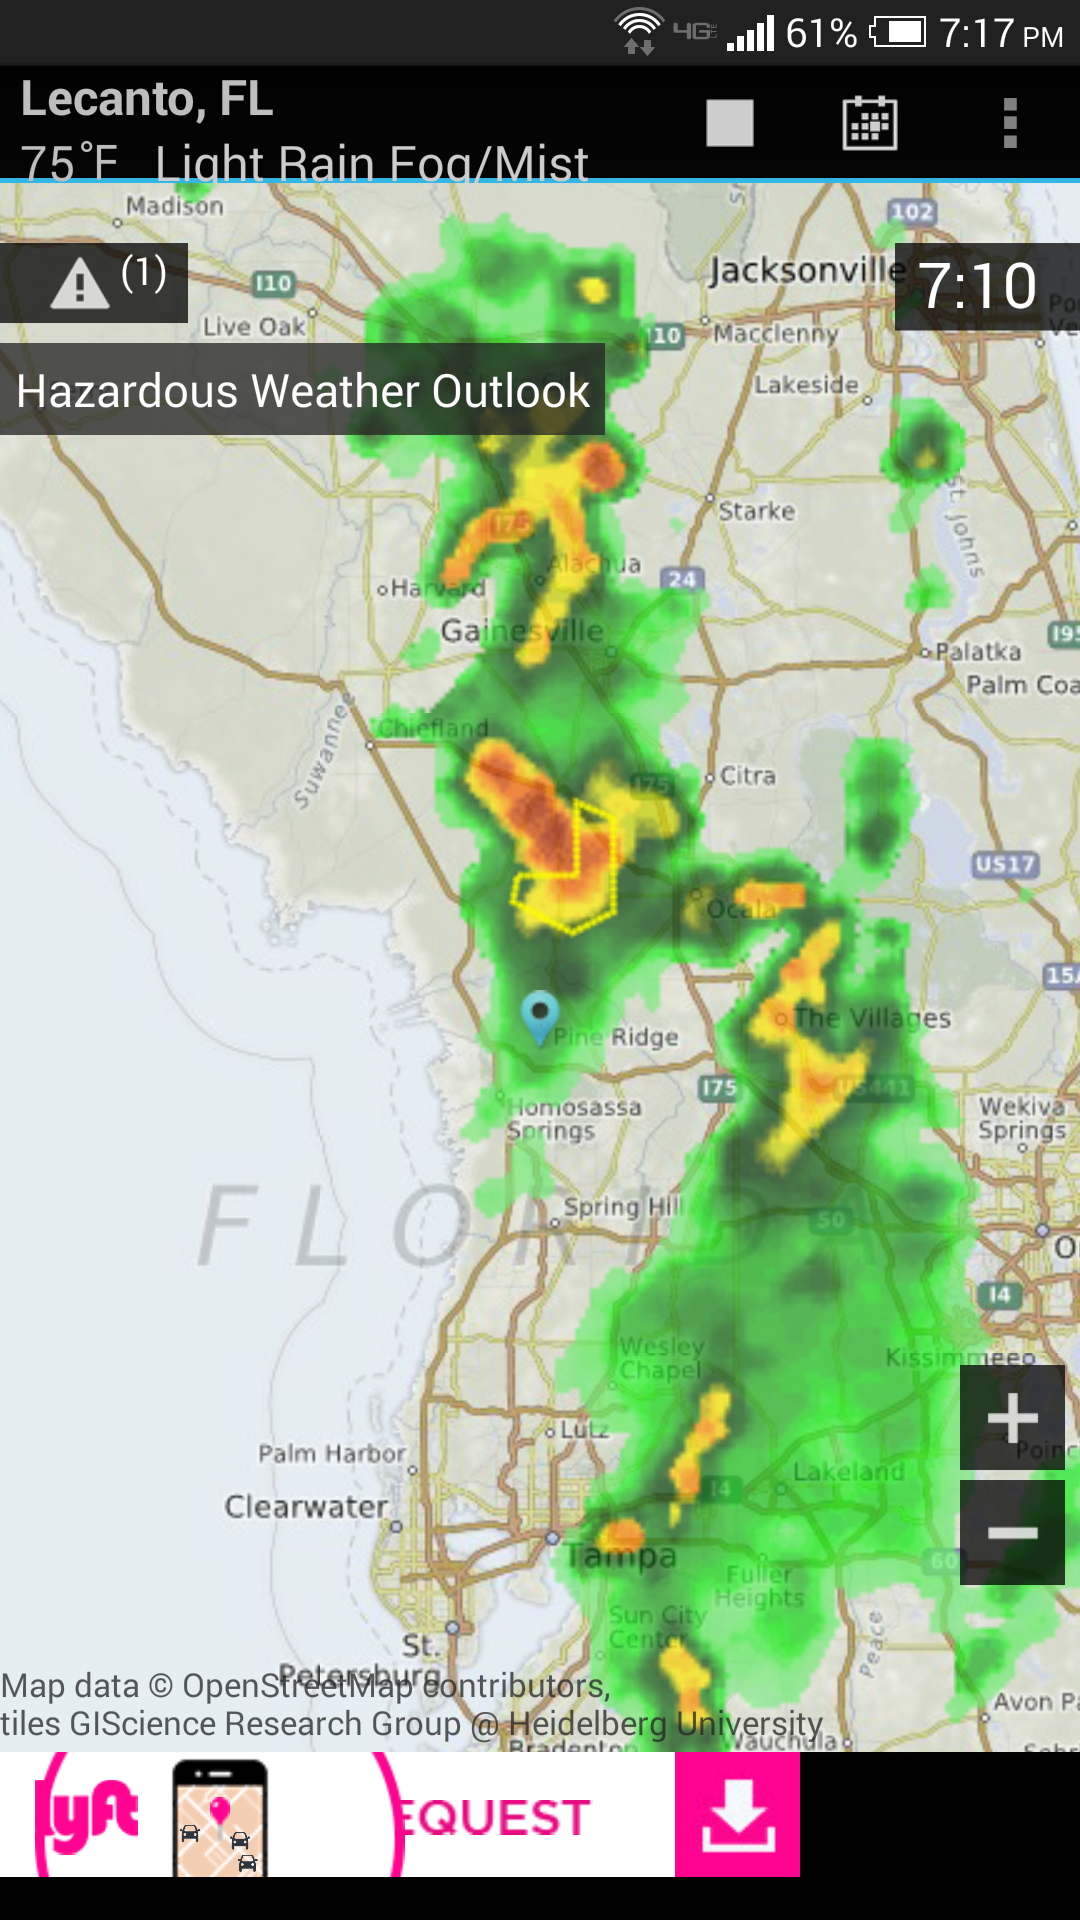 It always rains in Florida.